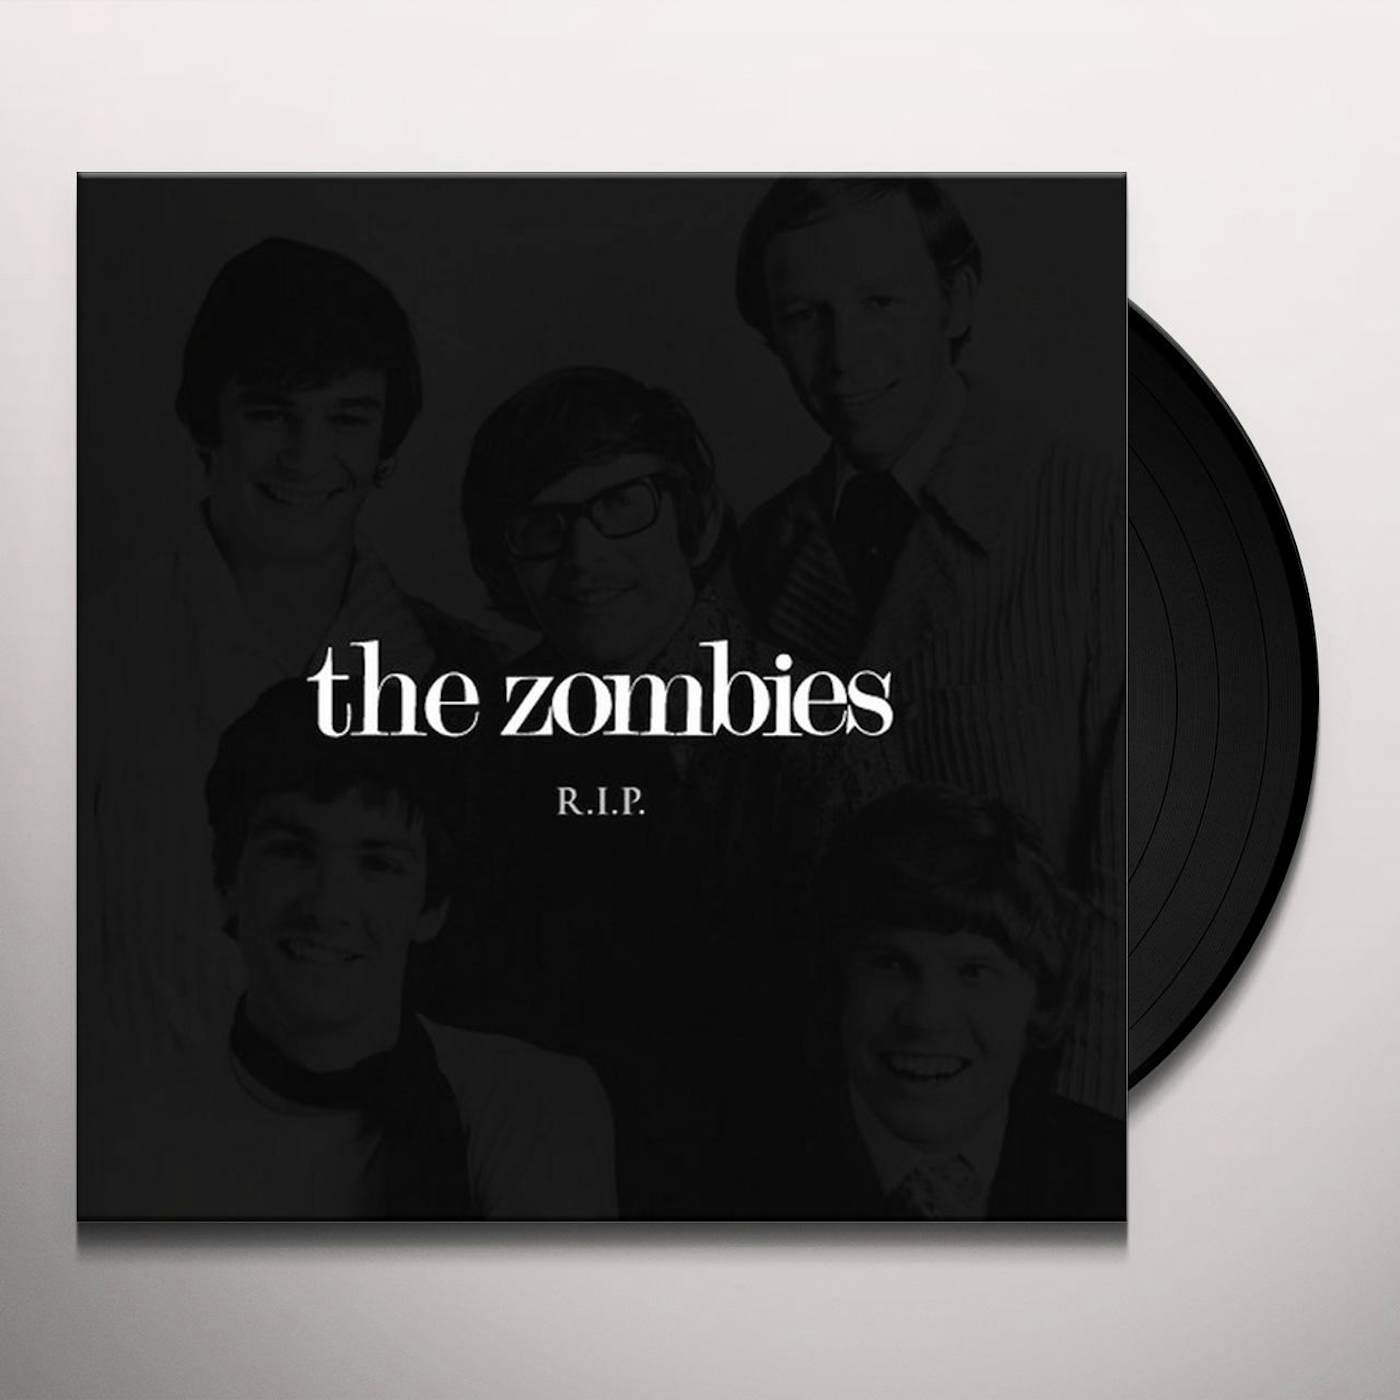 The Zombies R.I.P. Vinyl Record